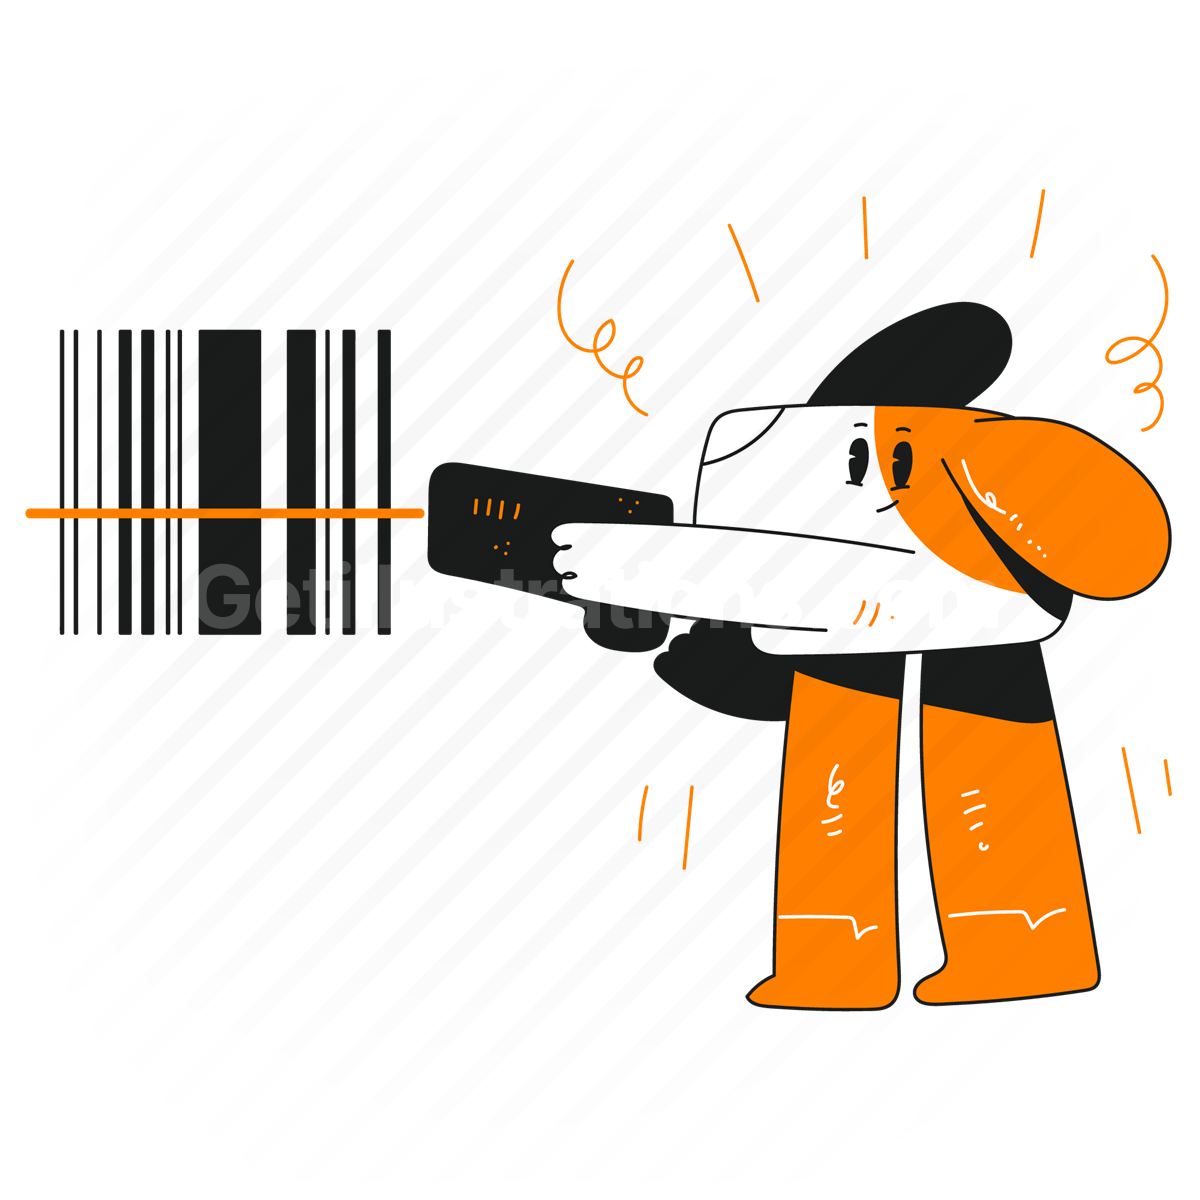 bar code, scan, shop, store, product, item, scanner